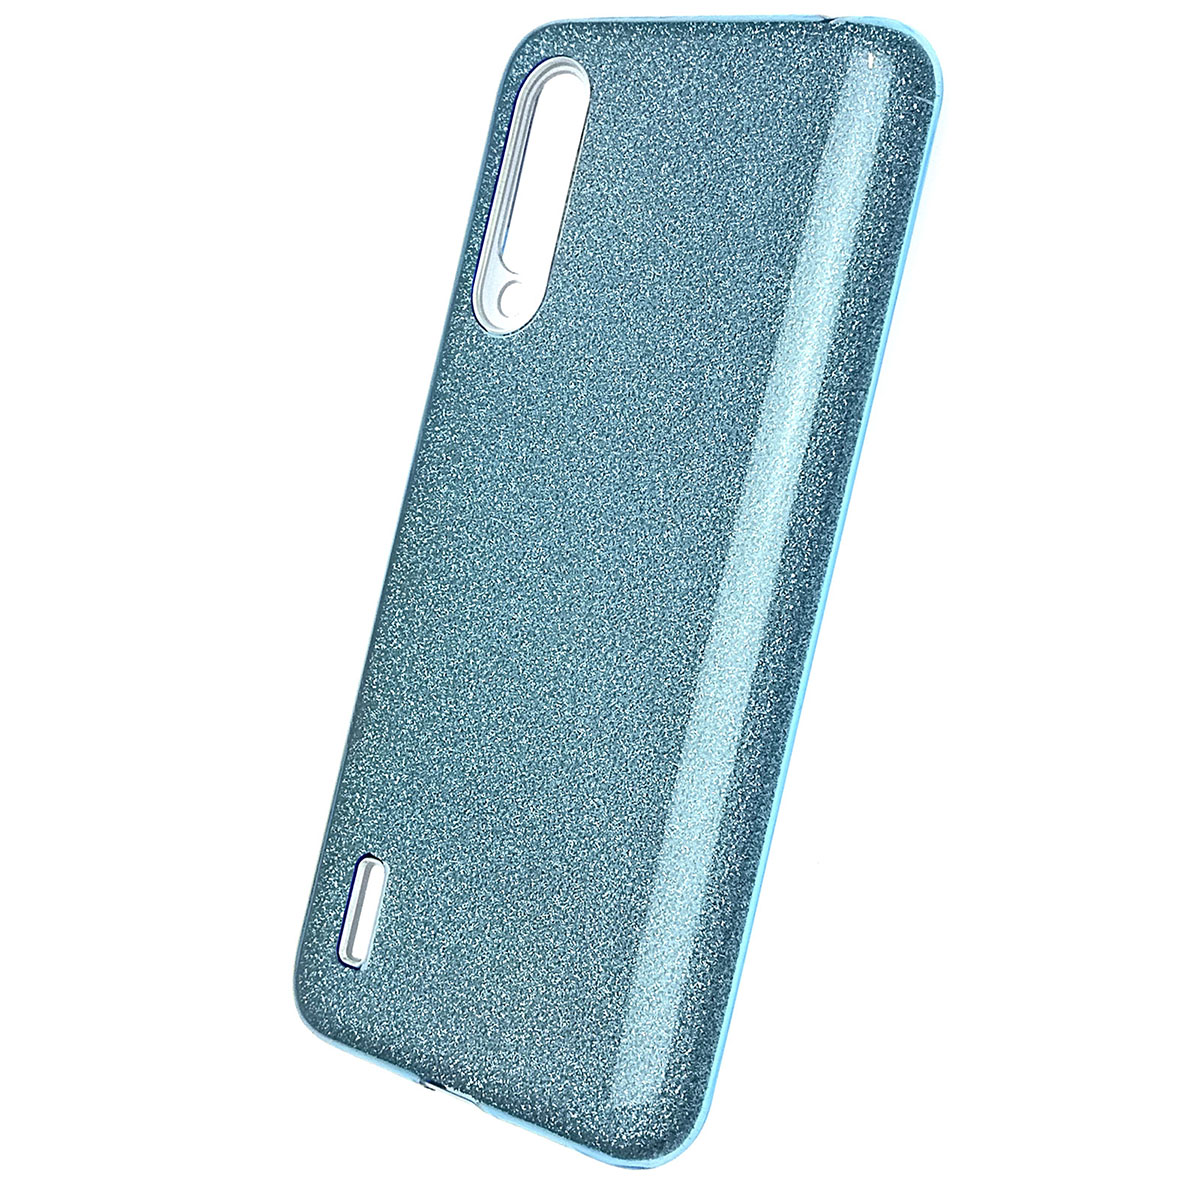 Чехол накладка для XIAOMI MI A3 LITE, MI CC9, MI 9 LITE, силикон, блестки, цвет голубой.